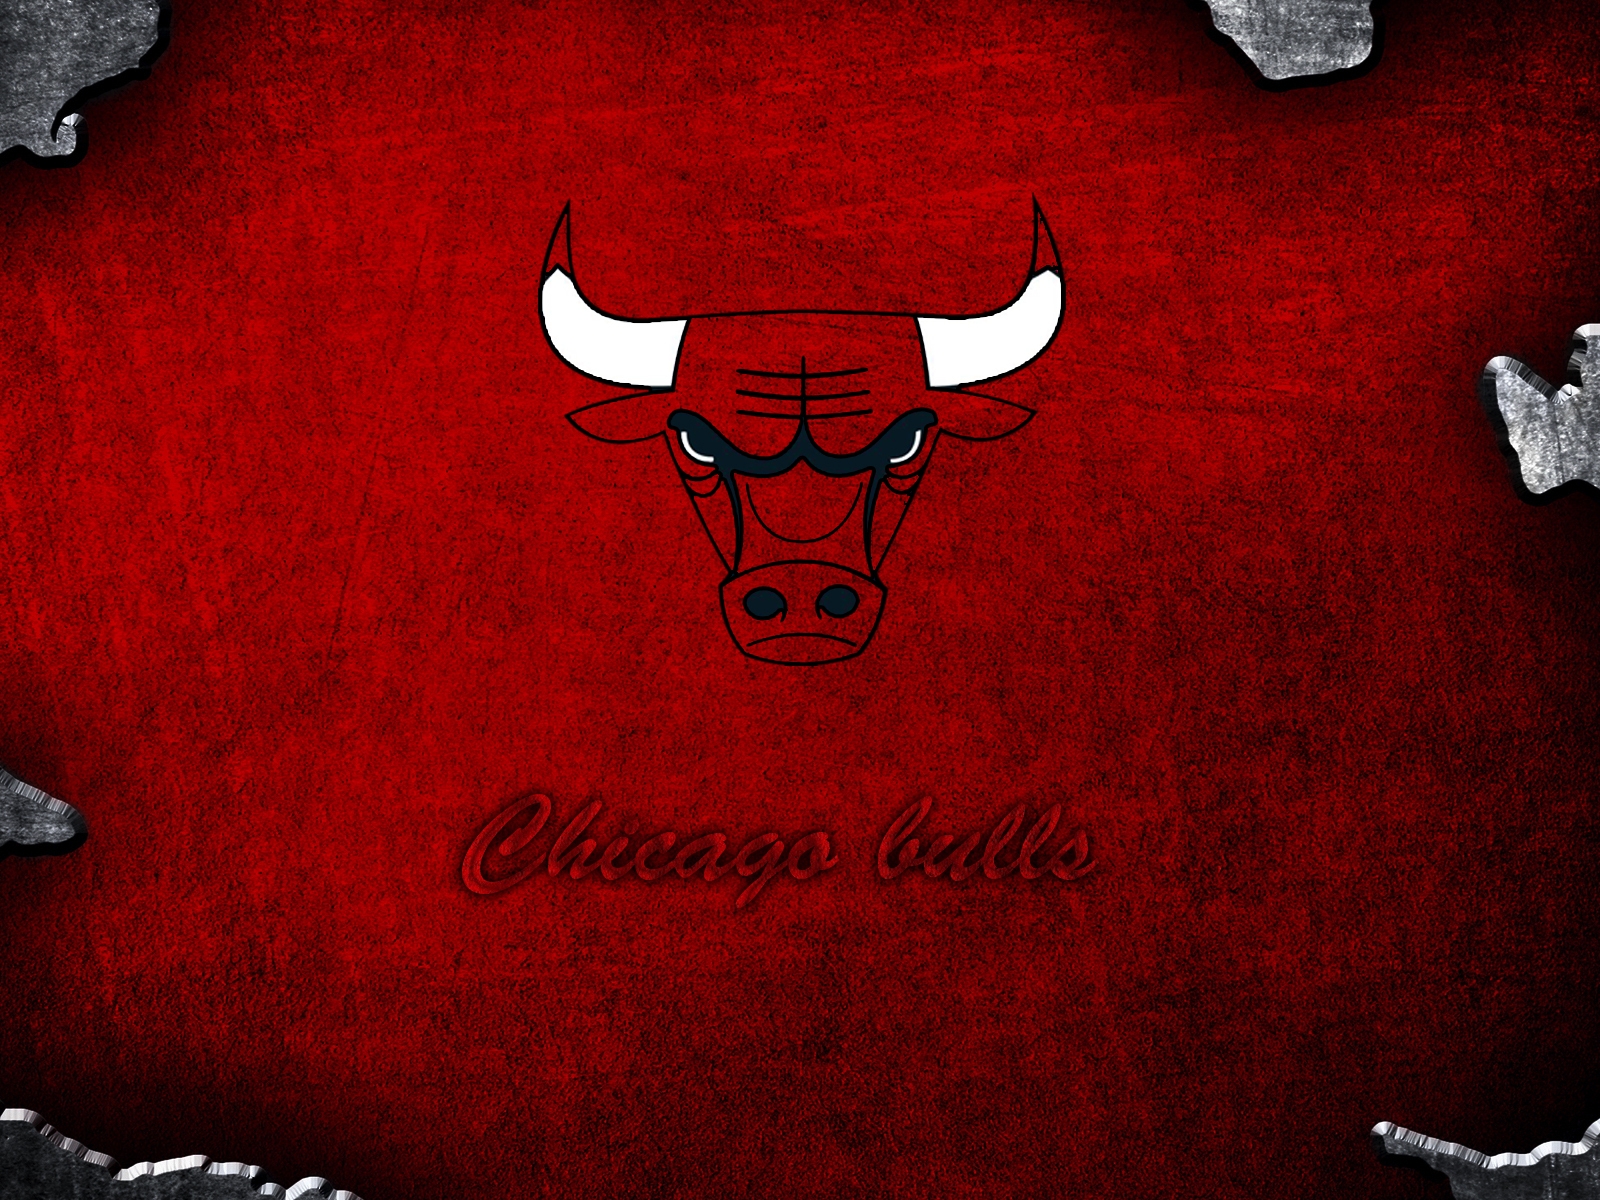 Chicago Bulls Grunge for 1600 x 1200 resolution